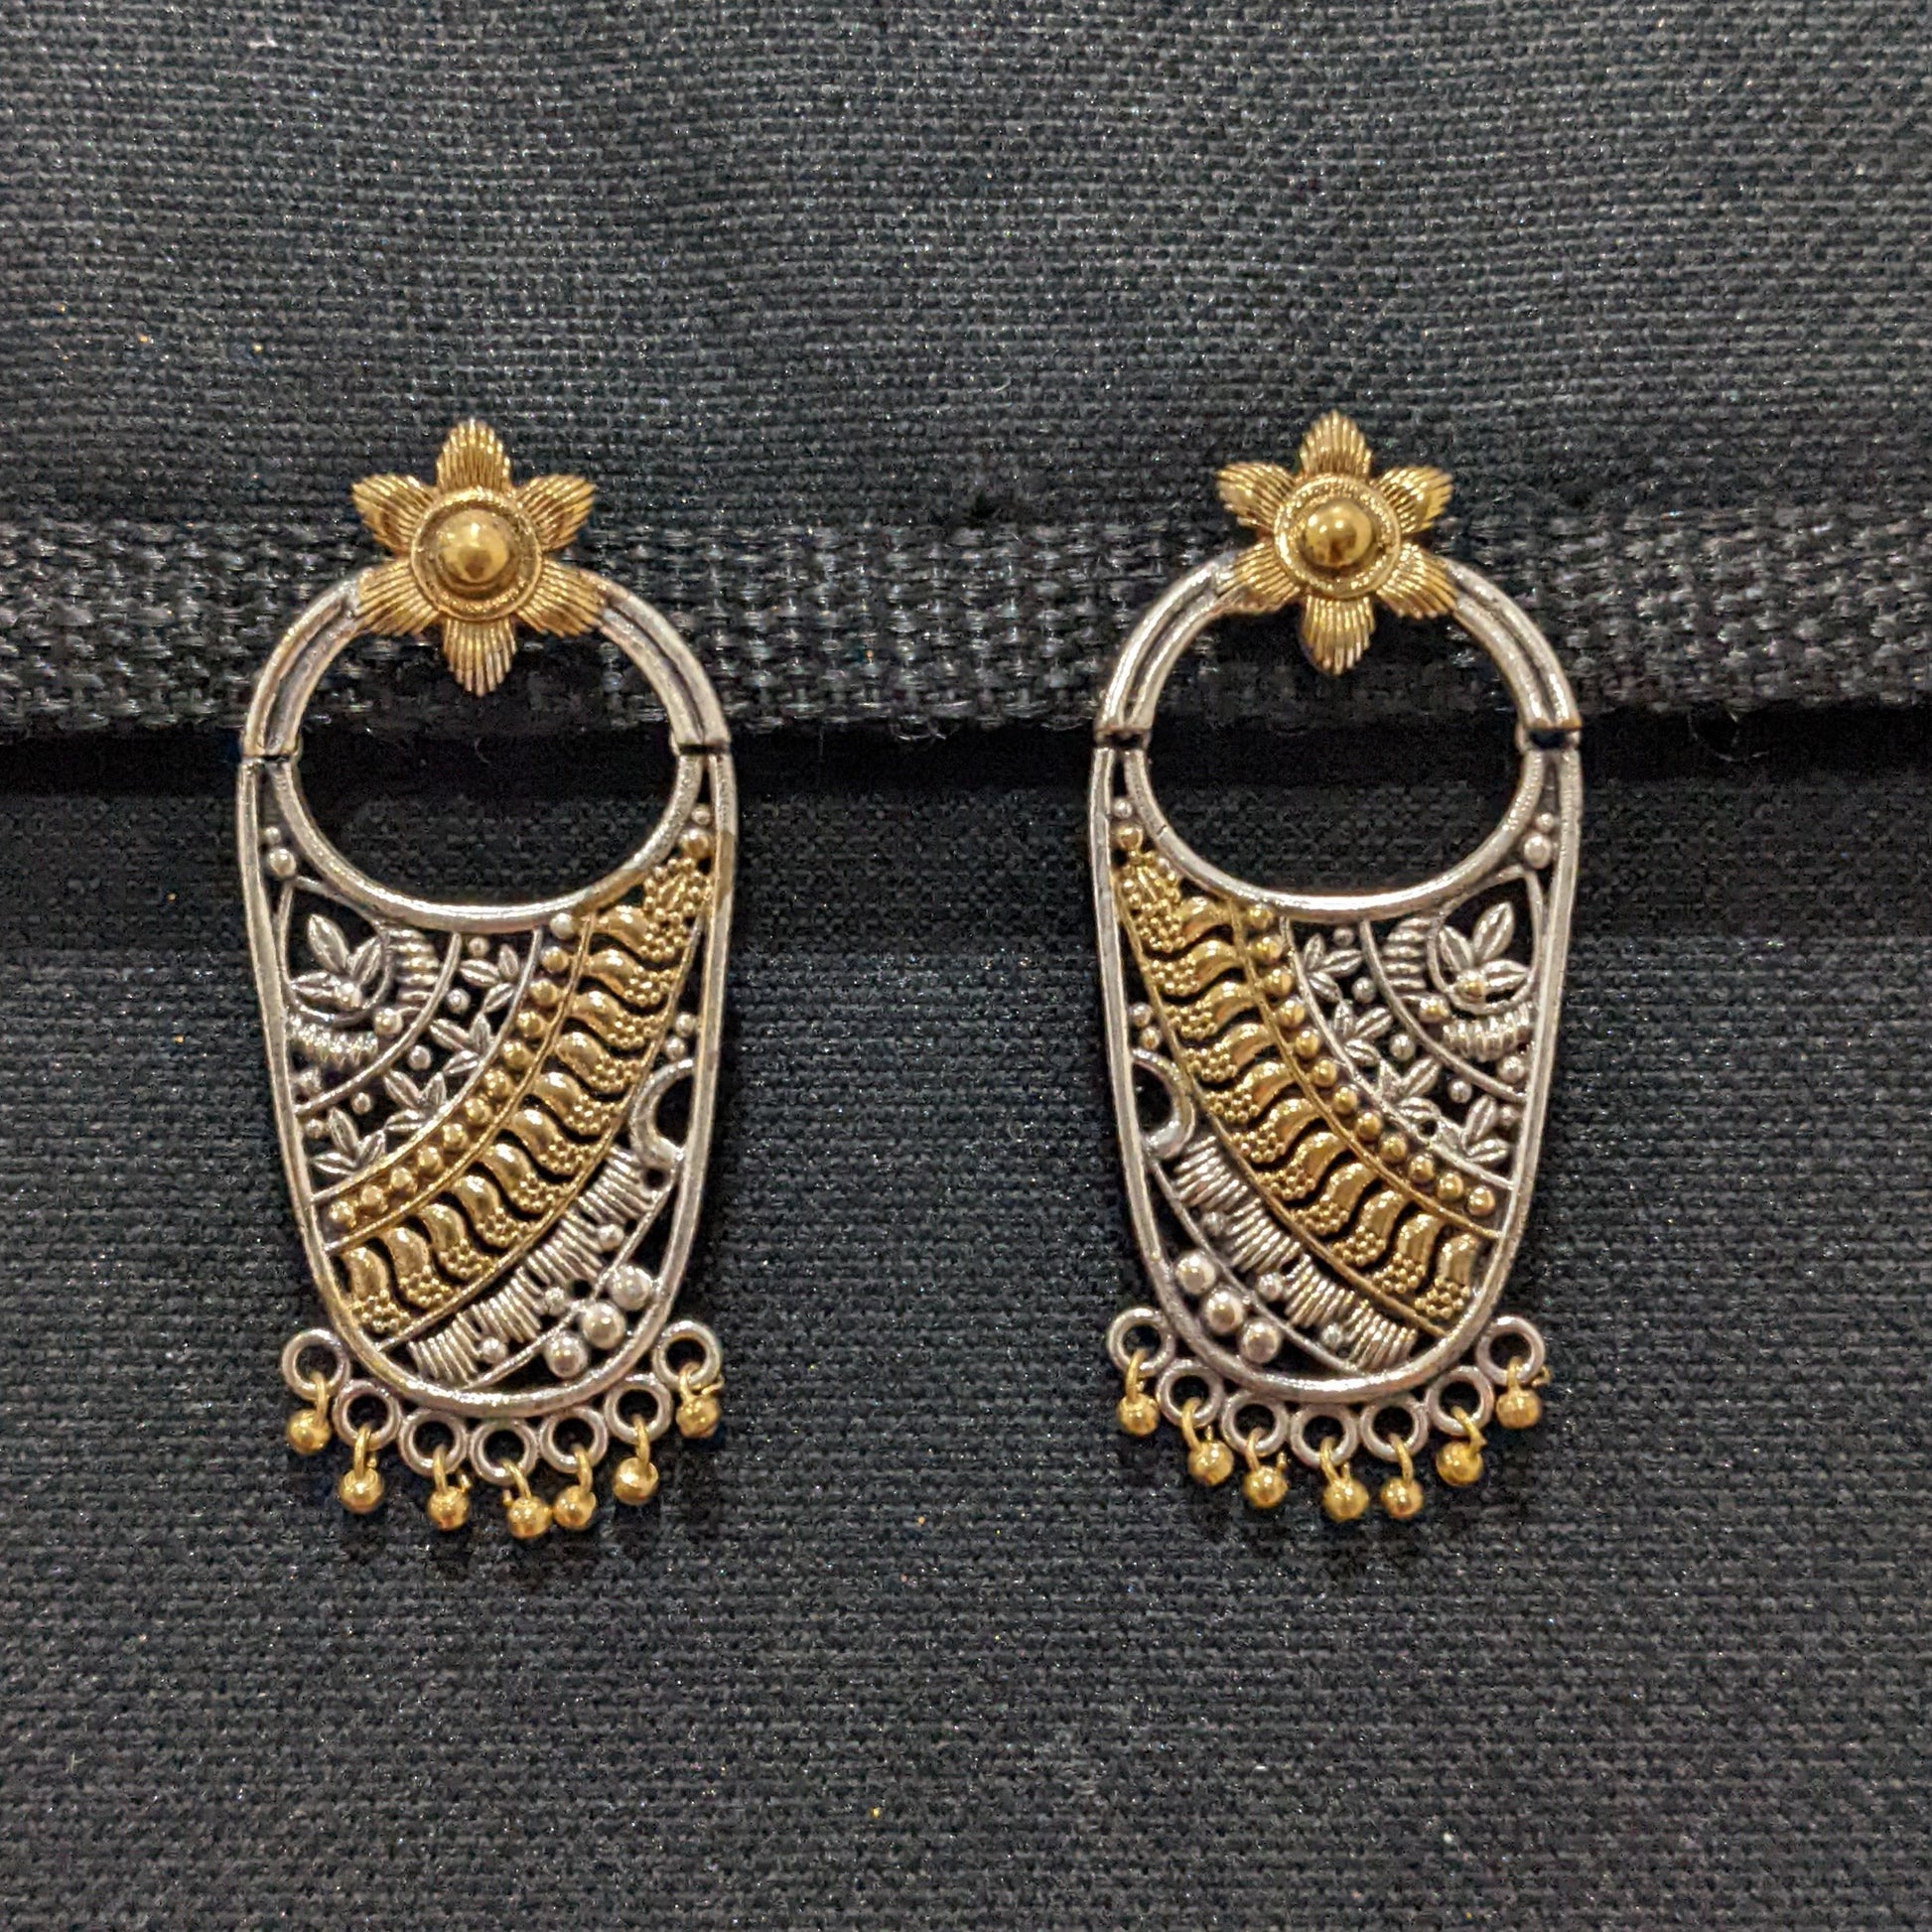 Dual tone oxidized silver designer earrings - Simpliful